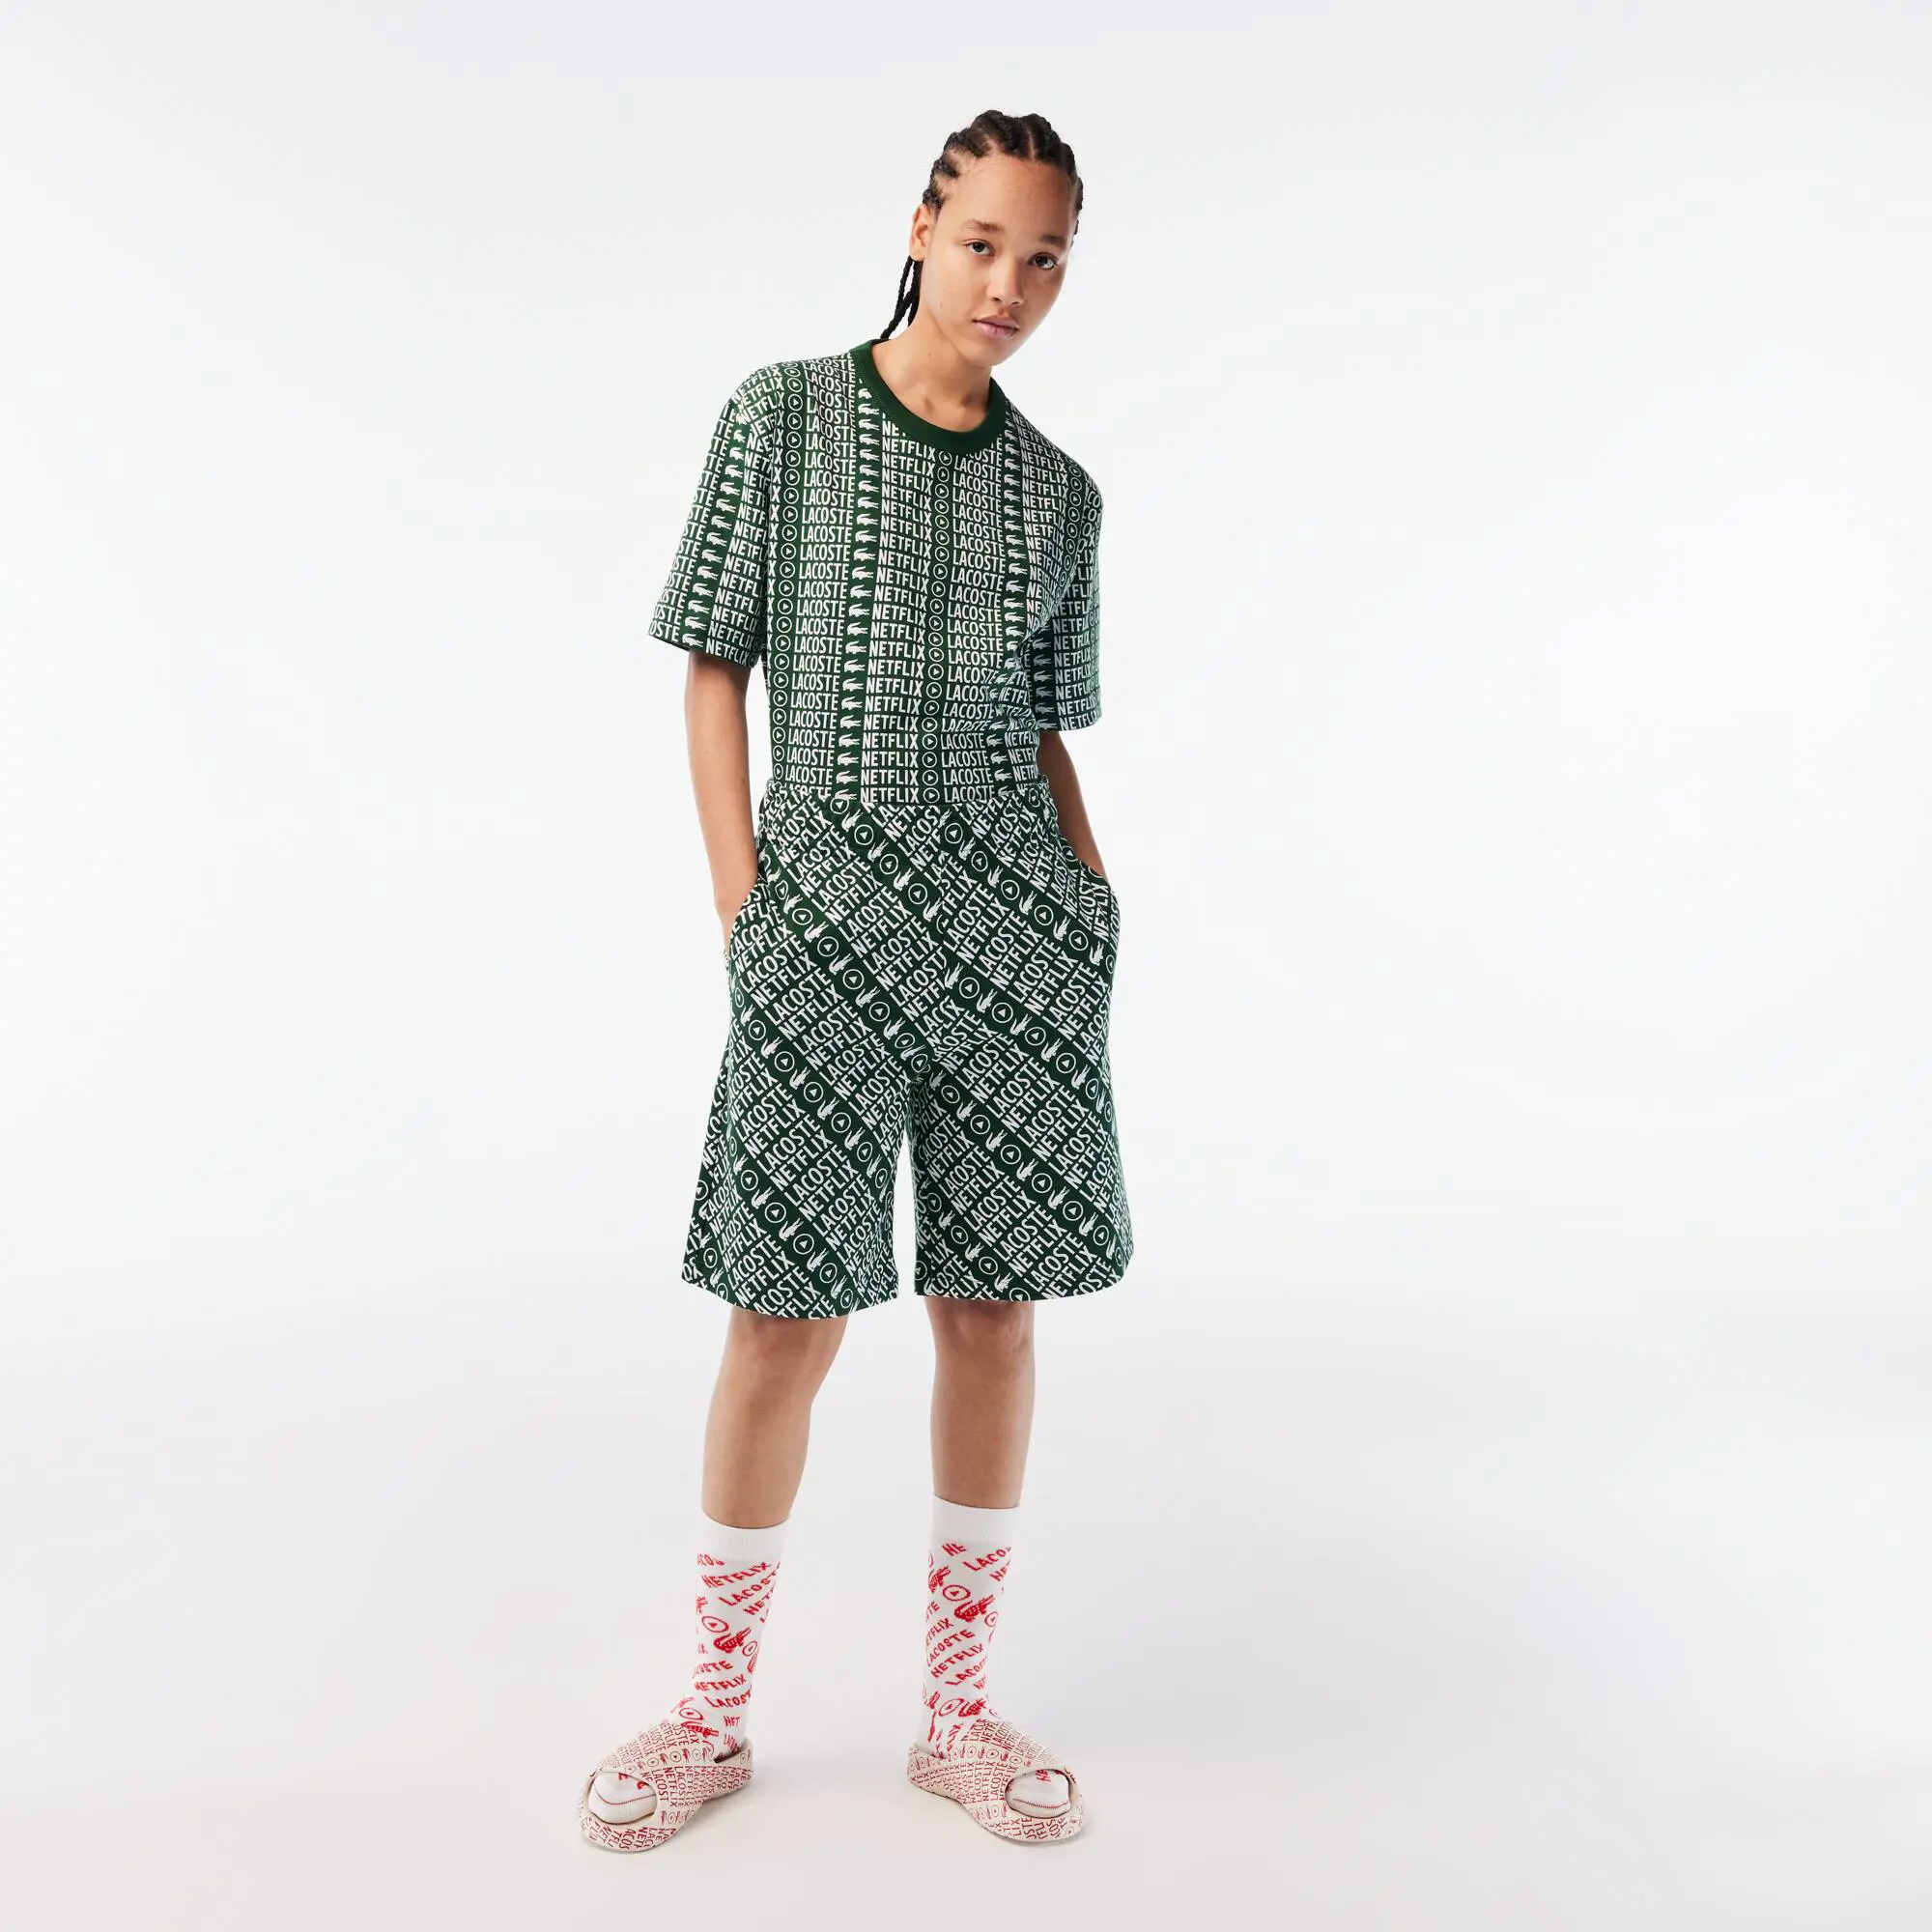 Lacoste Women’s Lacoste x Netflix Organic Cotton Print Shorts. 1